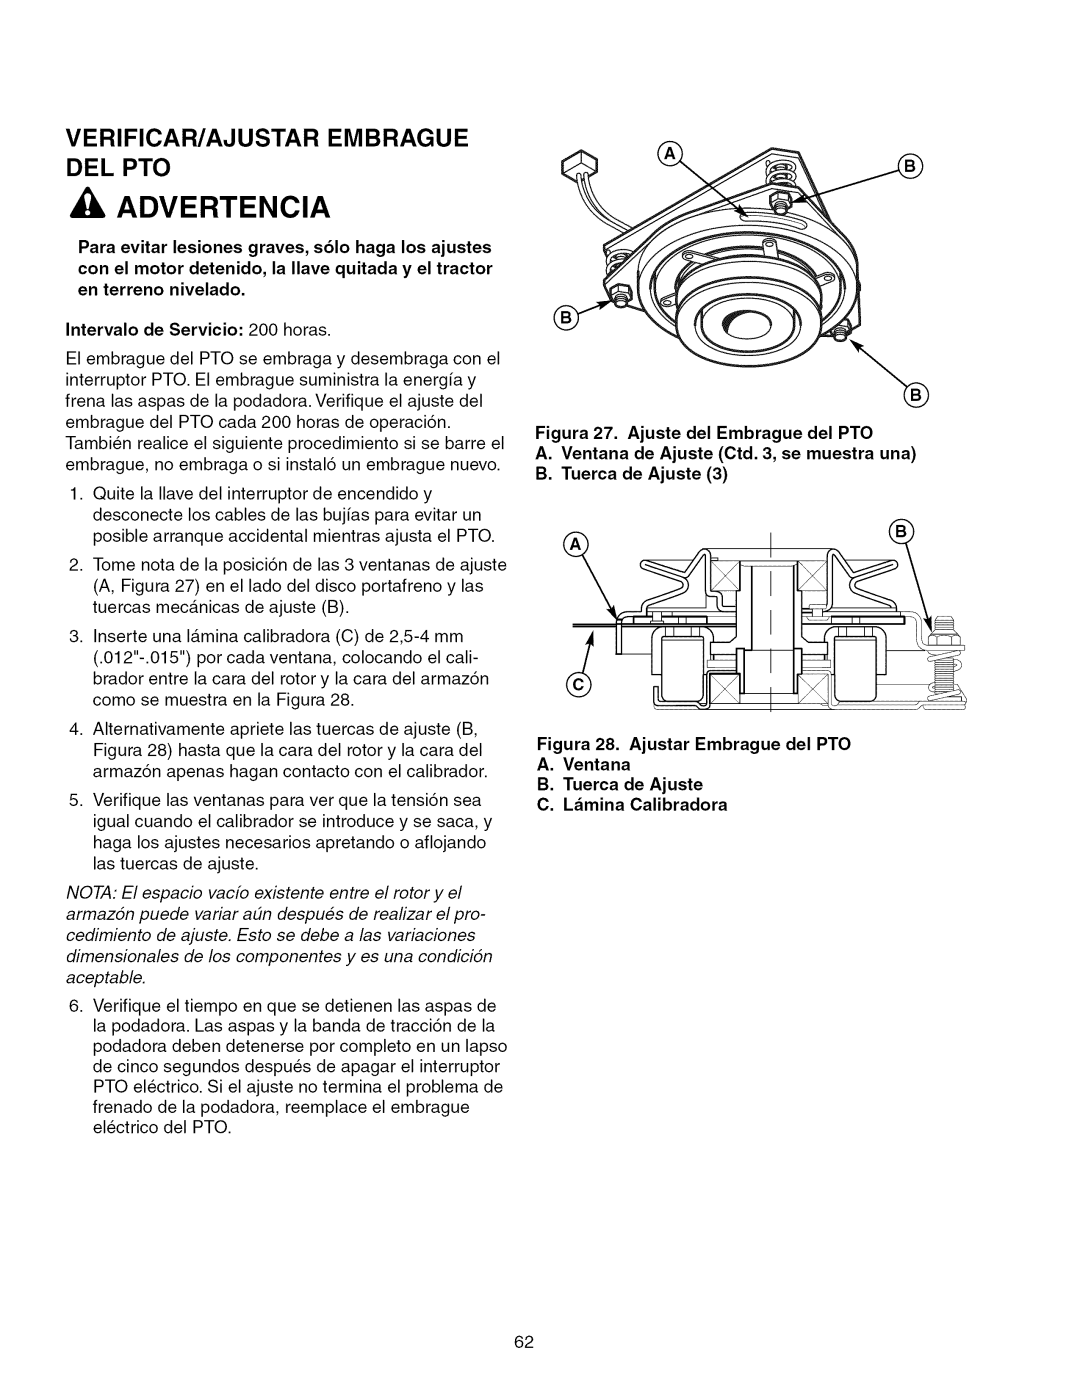 Craftsman 28986, ZTS 6000 manual Verificar/Ajustar Embrague Del Pto, Figura 27. Ajuste del Embrague del PTO, Advertencia 